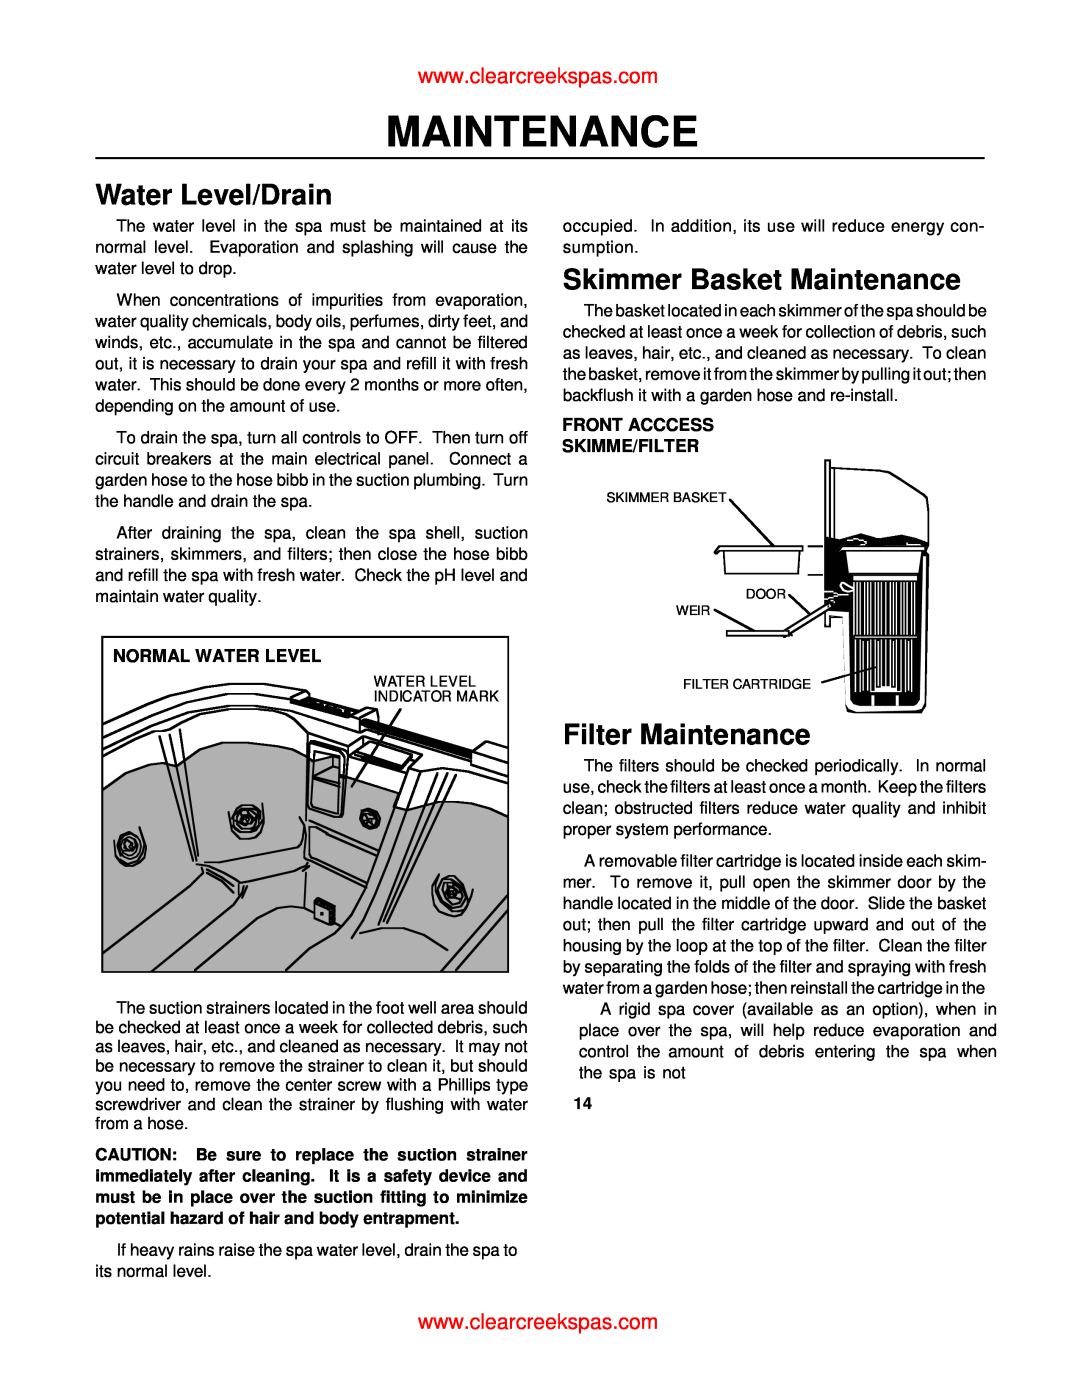 Whirlpool oortable spa owner manual Water Level/Drain, Skimmer Basket Maintenance, Filter Maintenance, Normal Water Level 